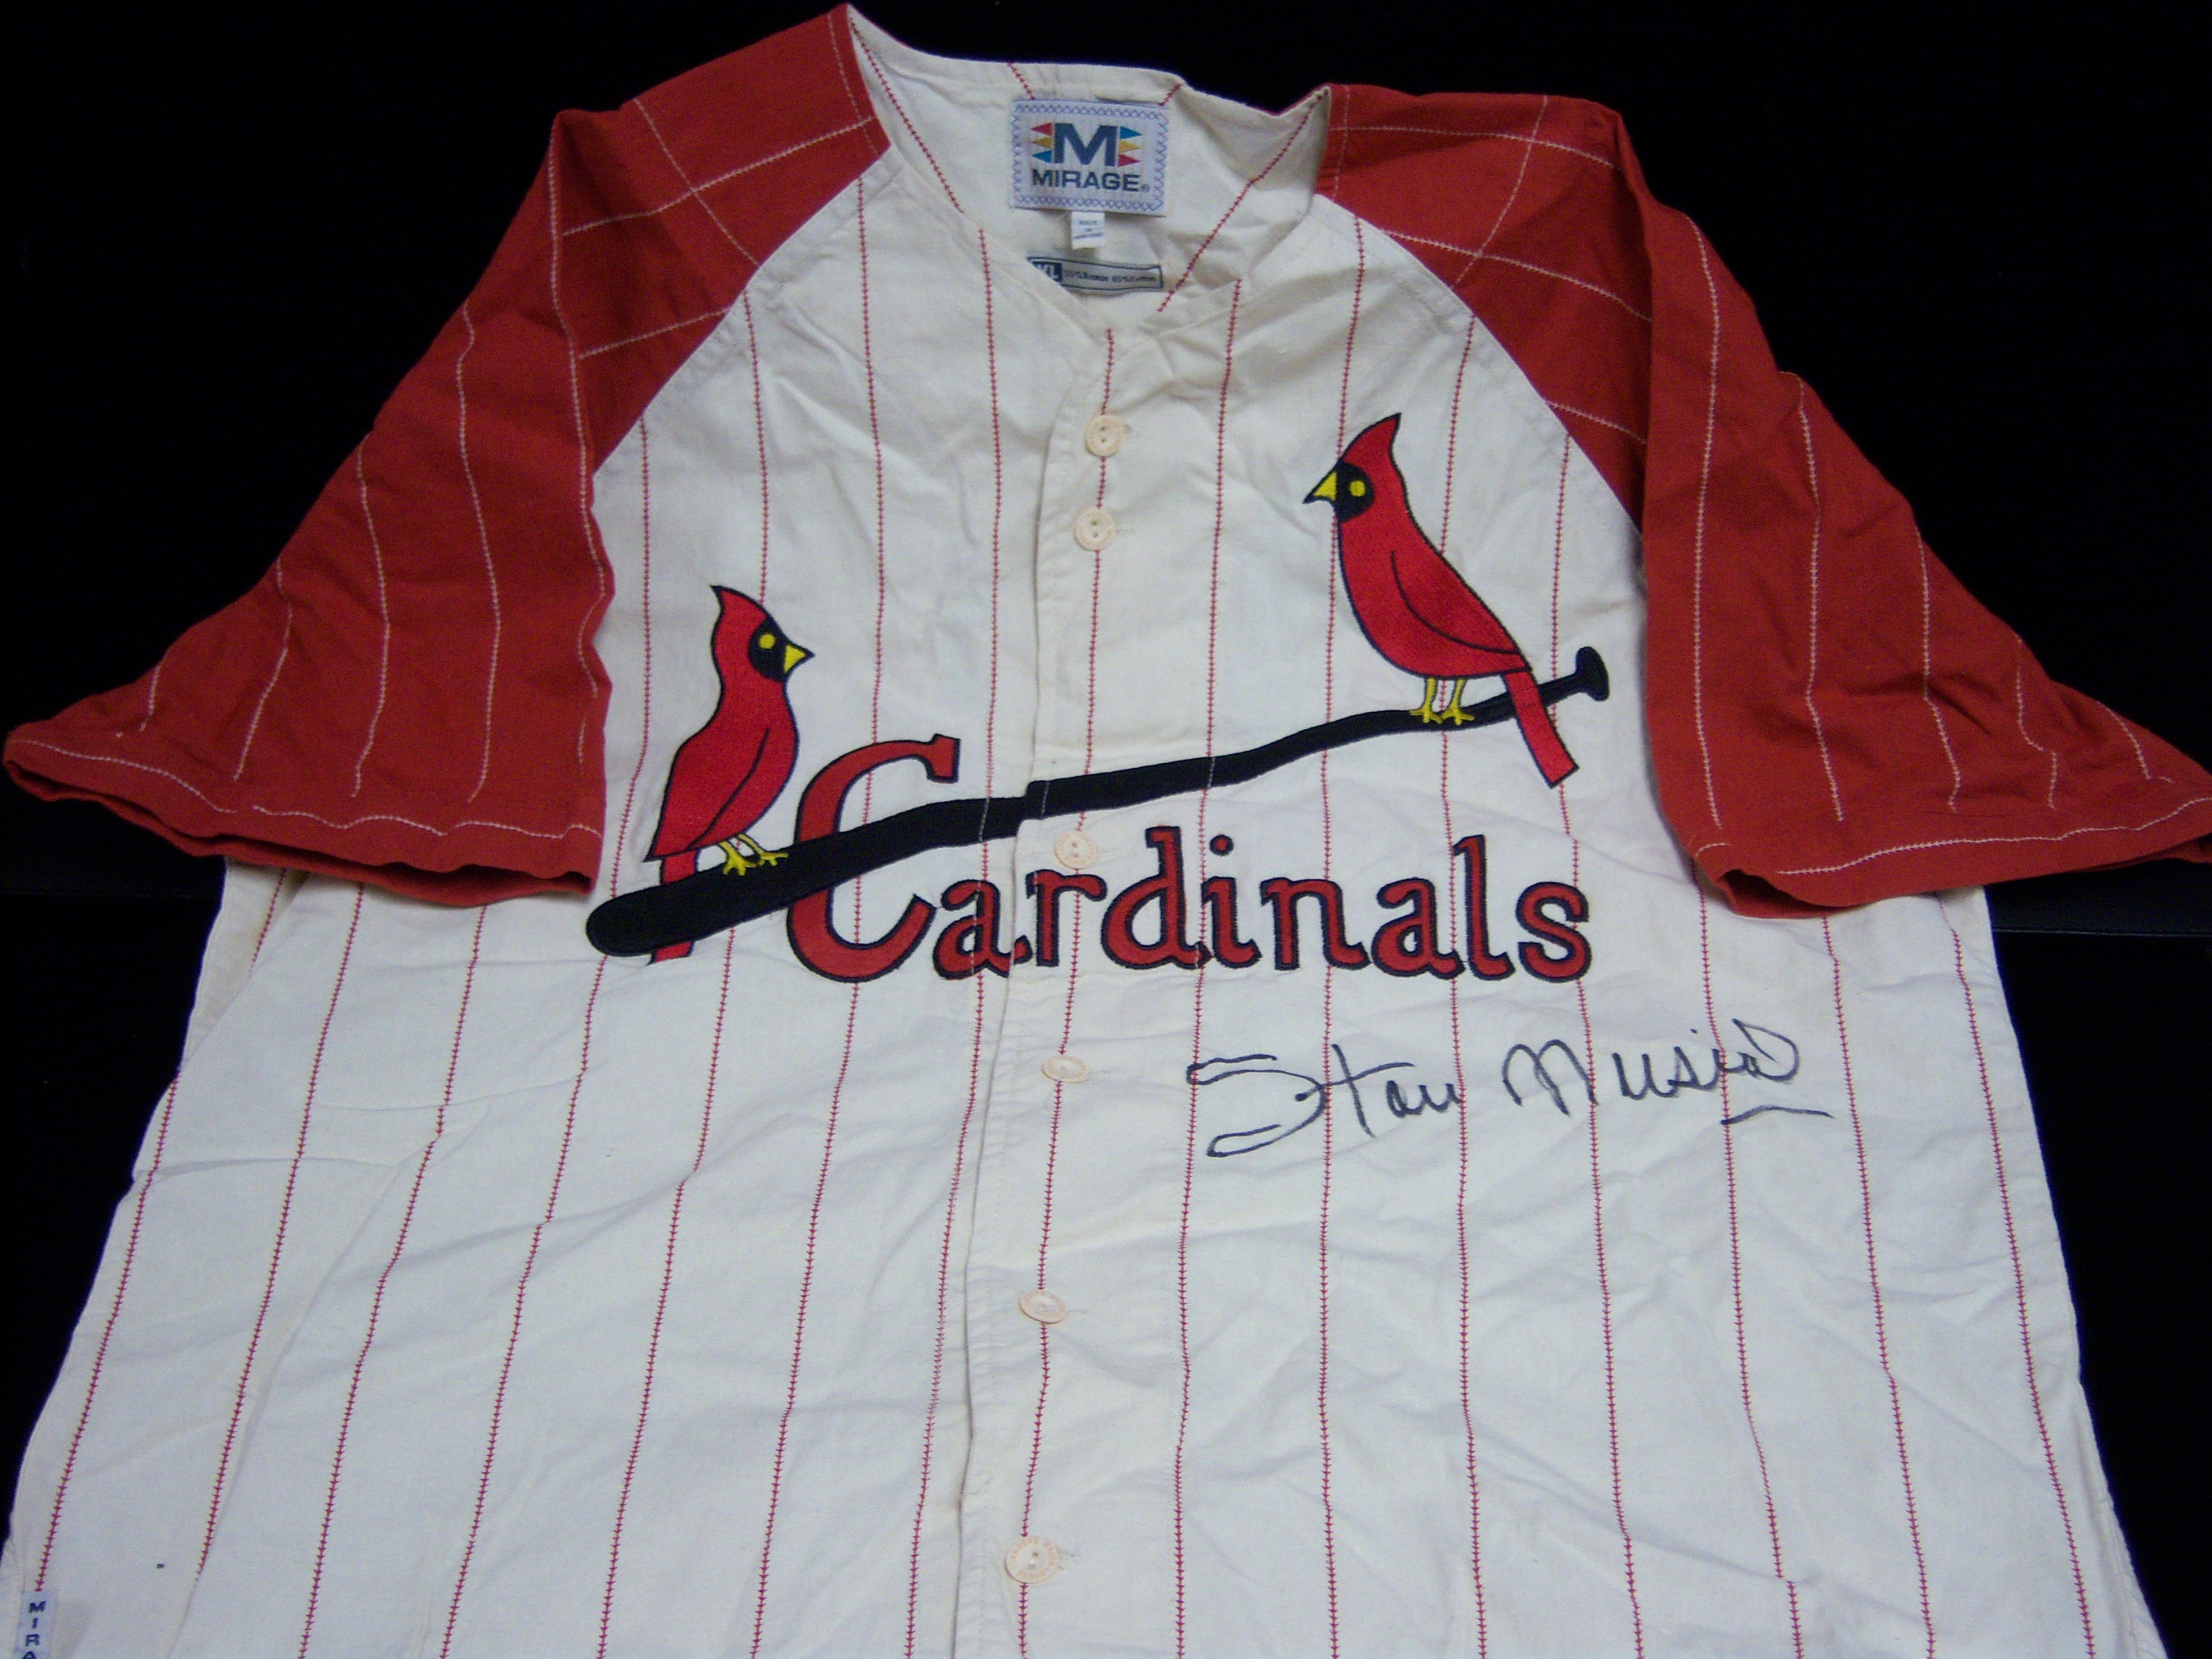 st louis cardinals cooperstown jersey